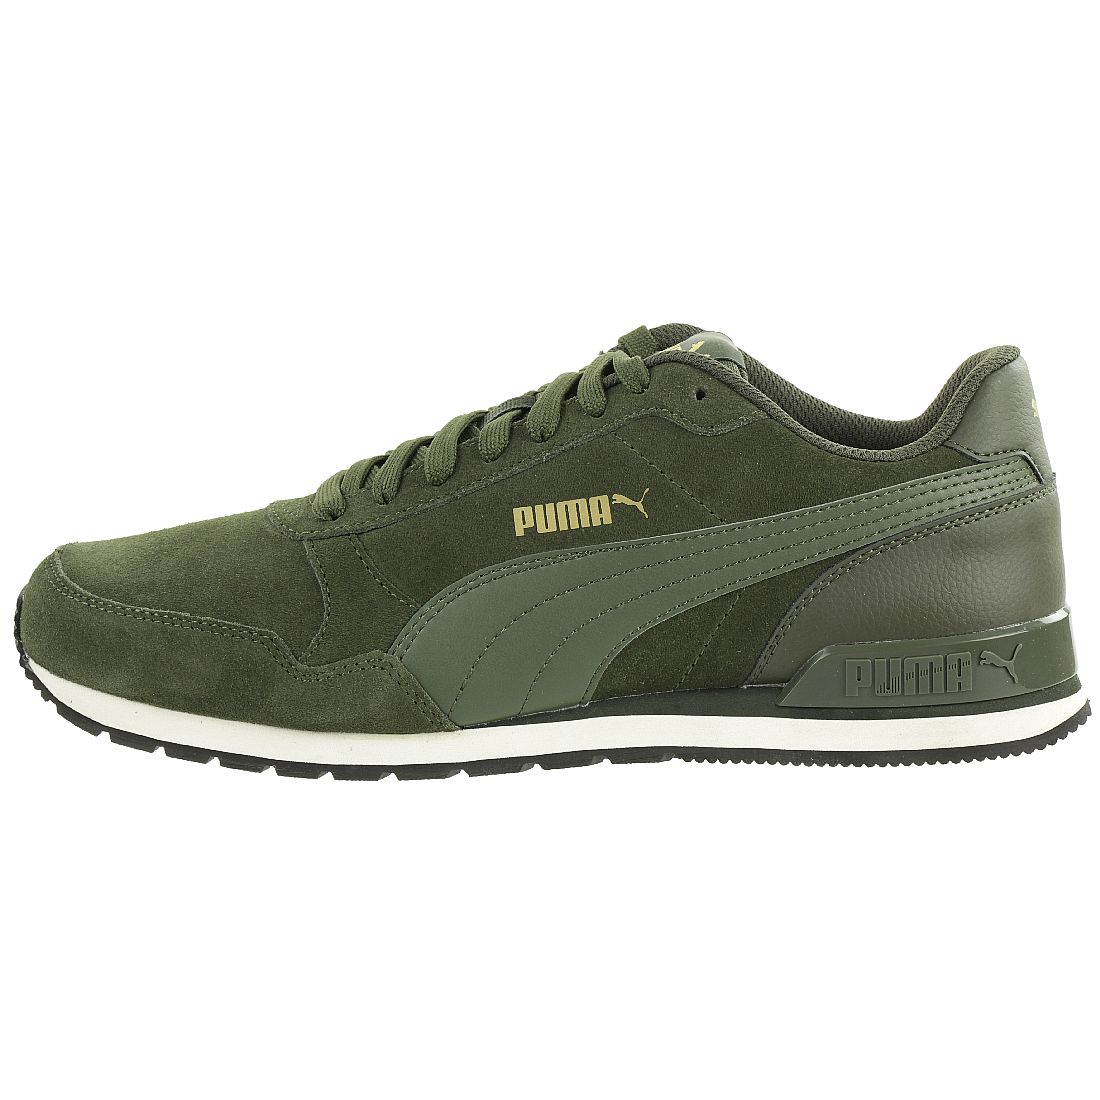 Puma ST Runner v2 SD Sneaker Schuhe 365279 04 Herren Schuhe grün